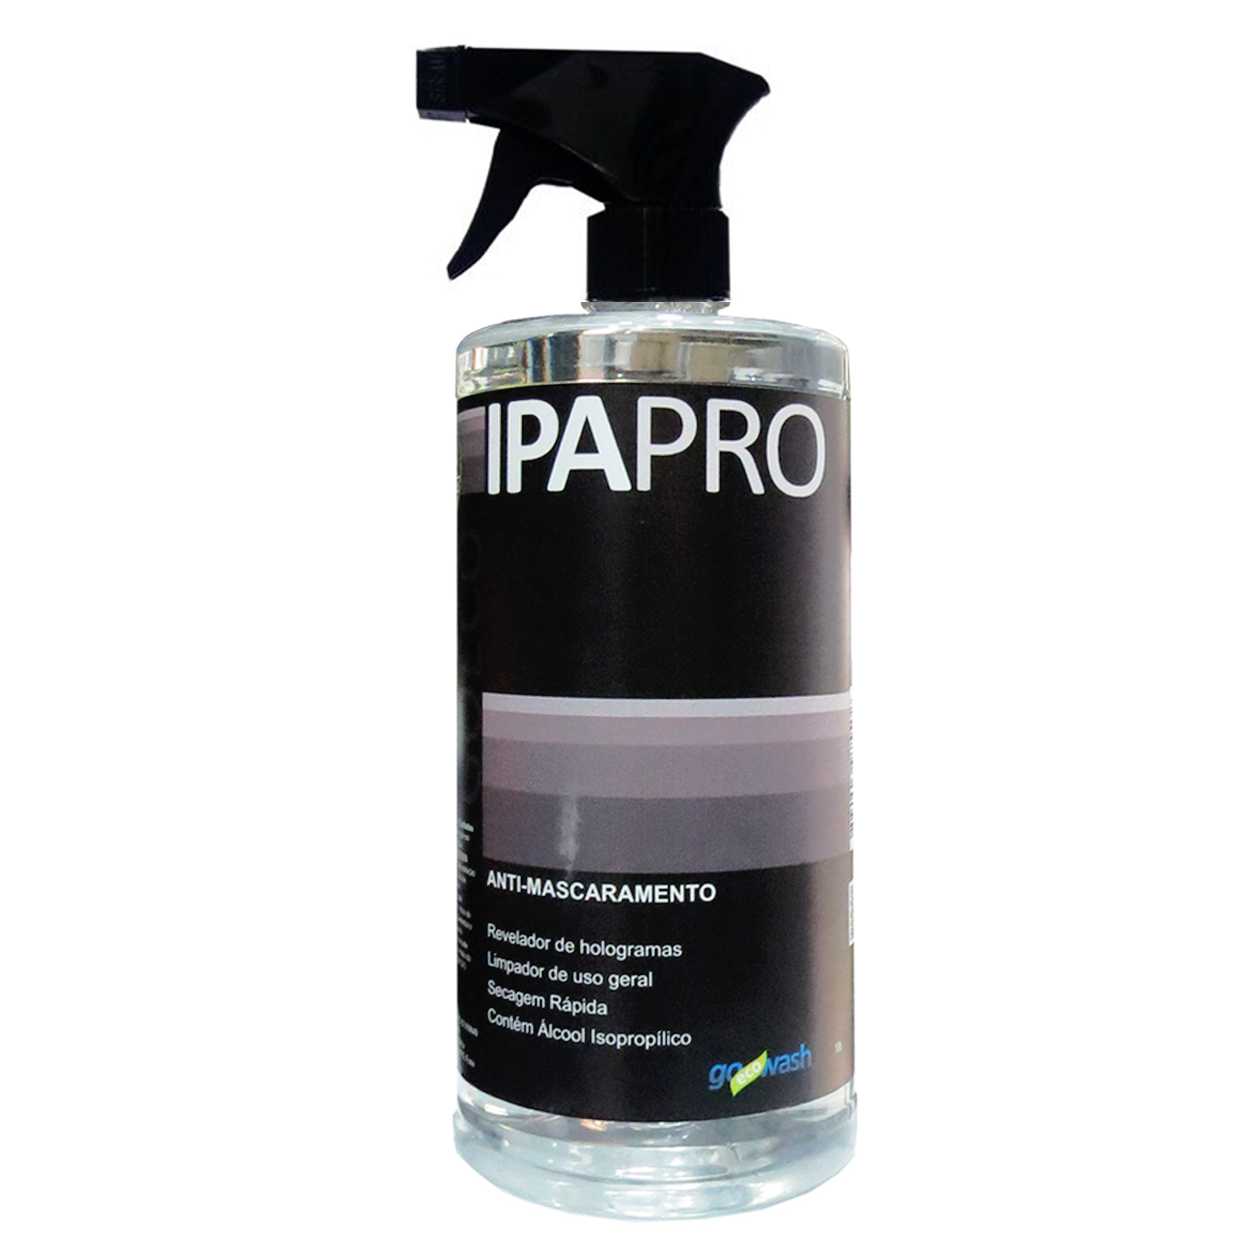 IPAPro Anti-Mascaramento com álcool isopropílico - 1Lt (Go Eco Wash)  - Loja Go Eco Wash 